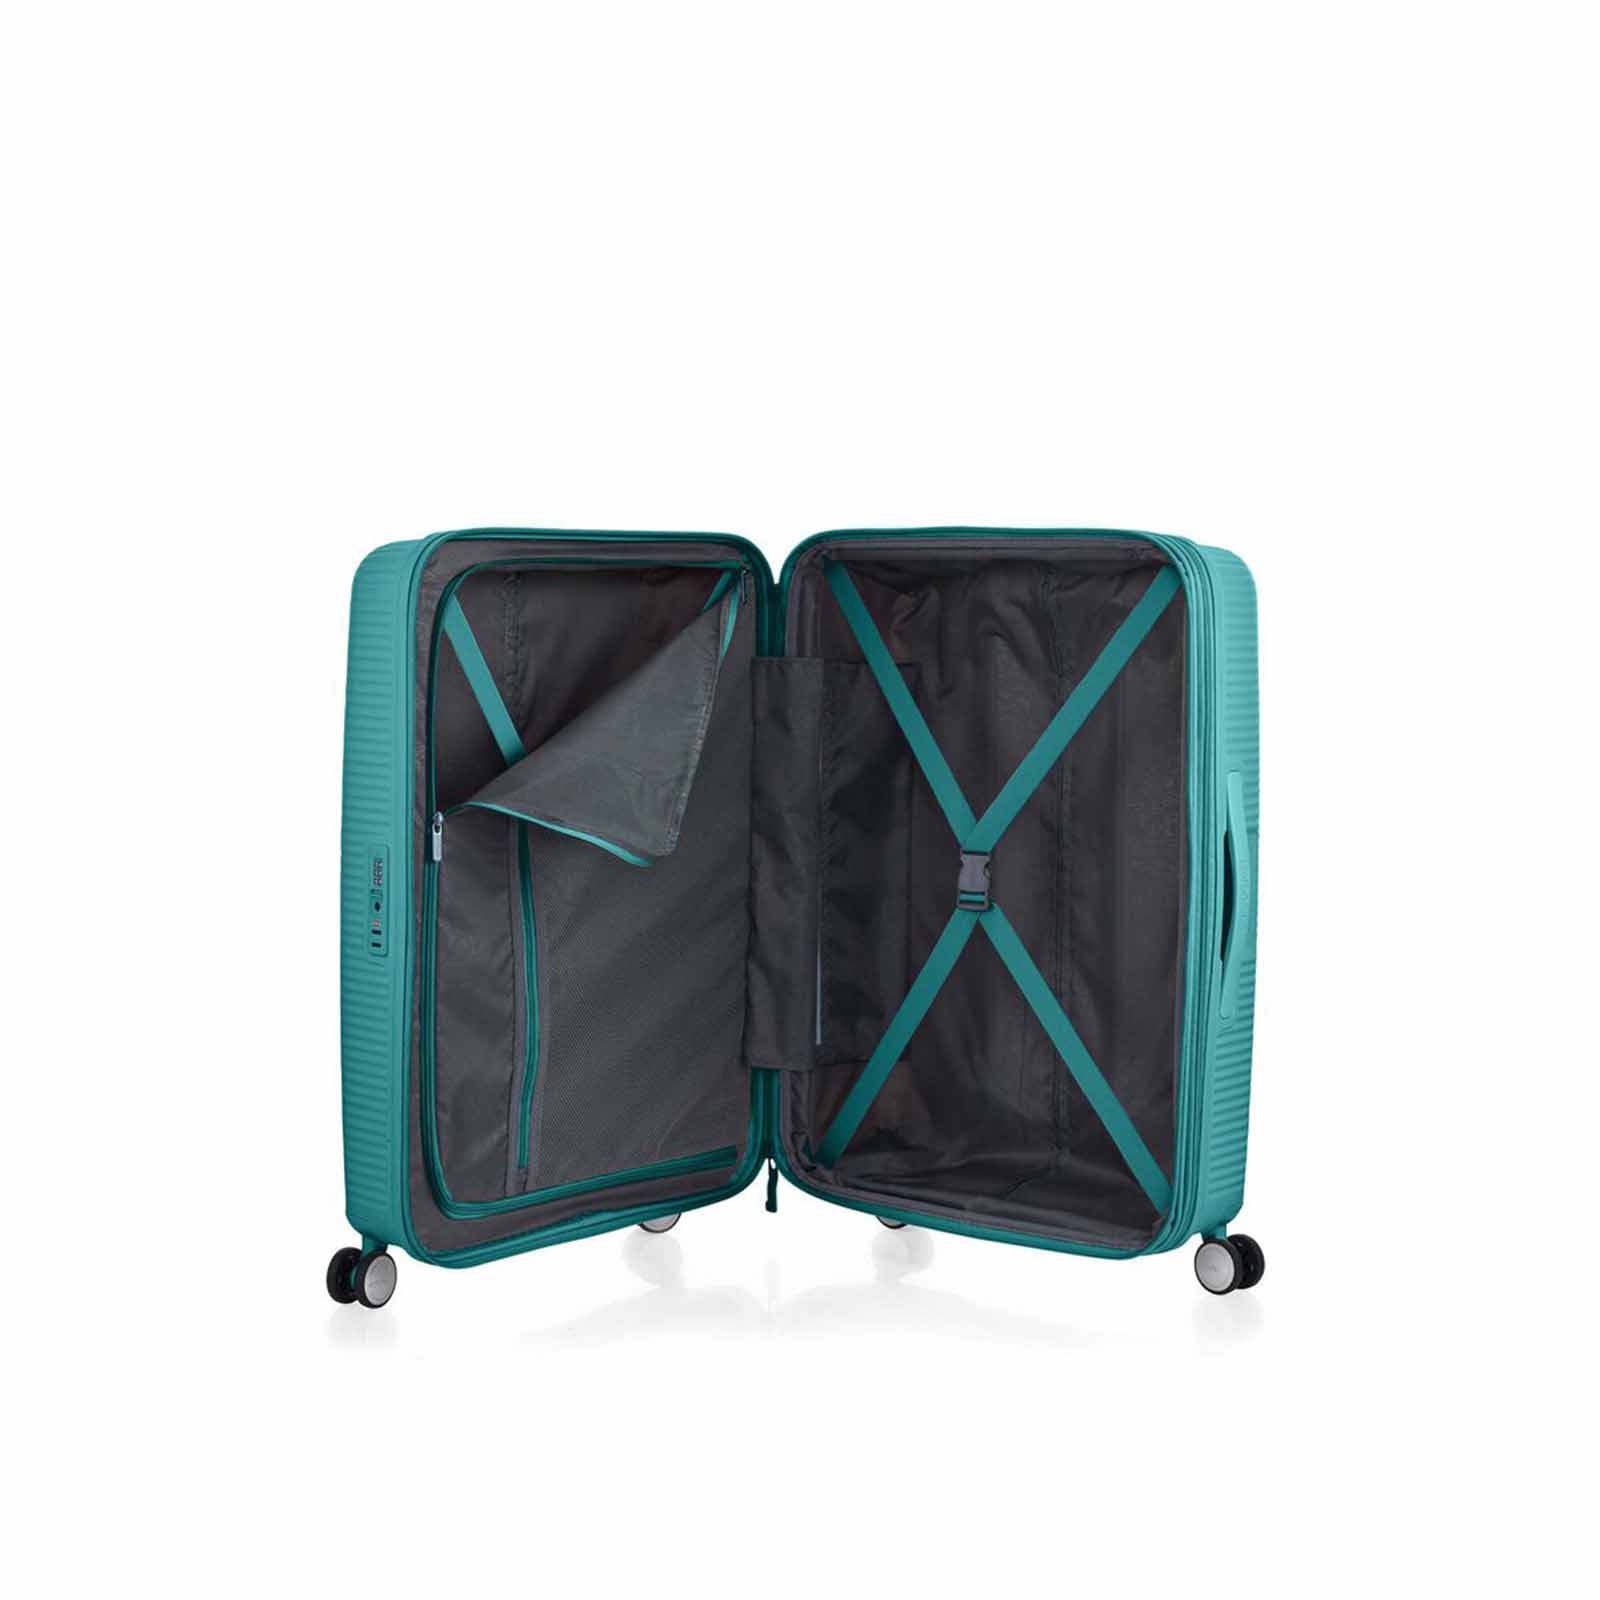 American-Tourister-Curio-2-69cm-Suitcase-Jade-Green-Open